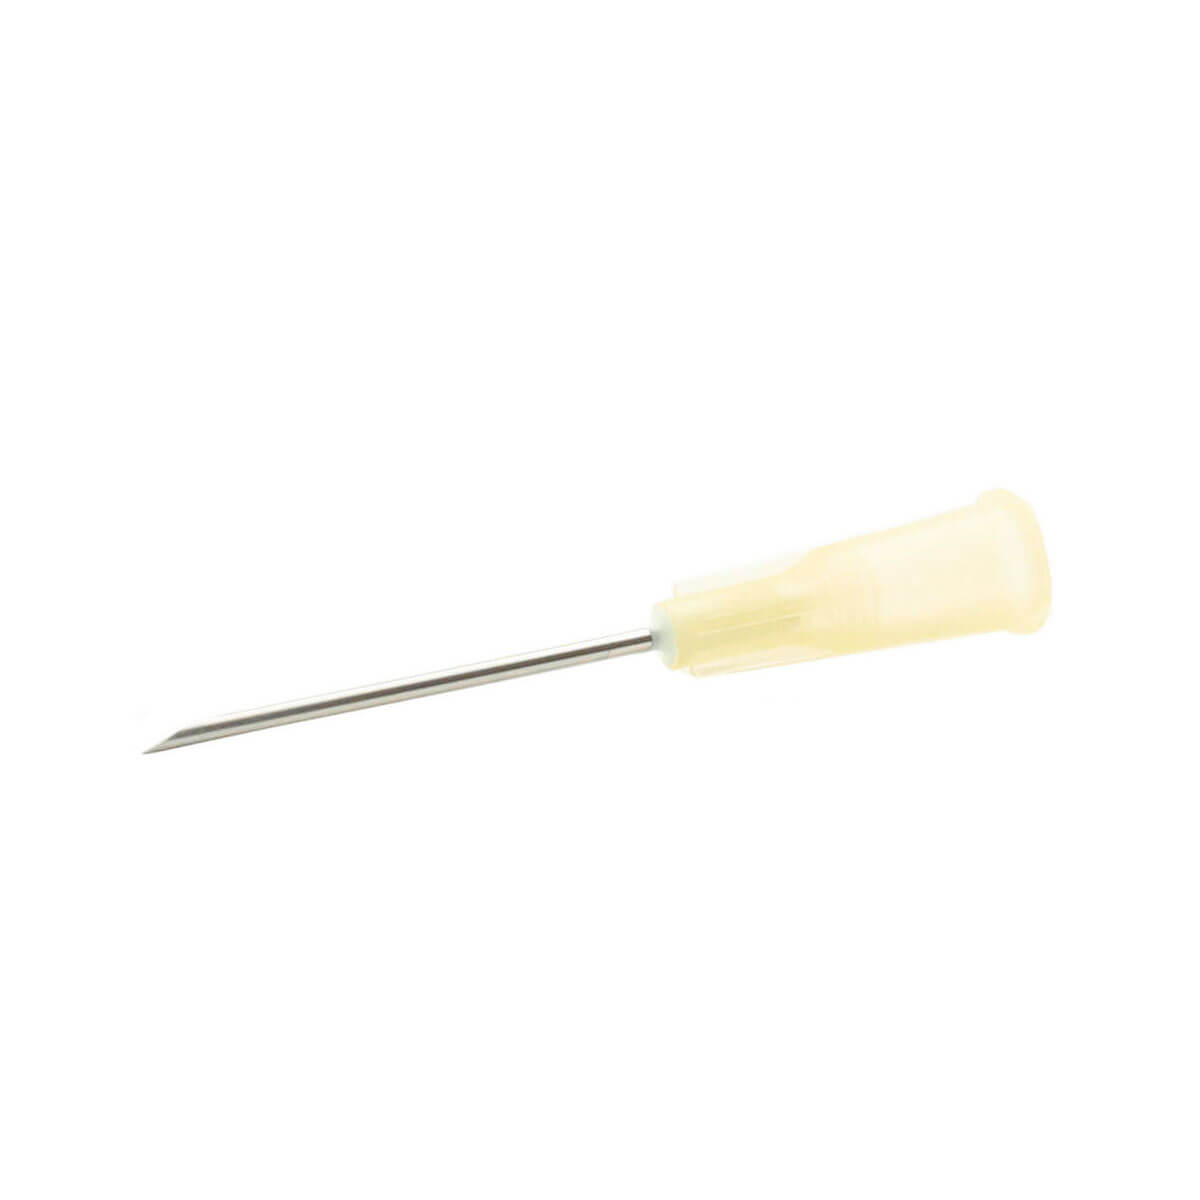 BD Microlance Needle Cream 19G 25MM